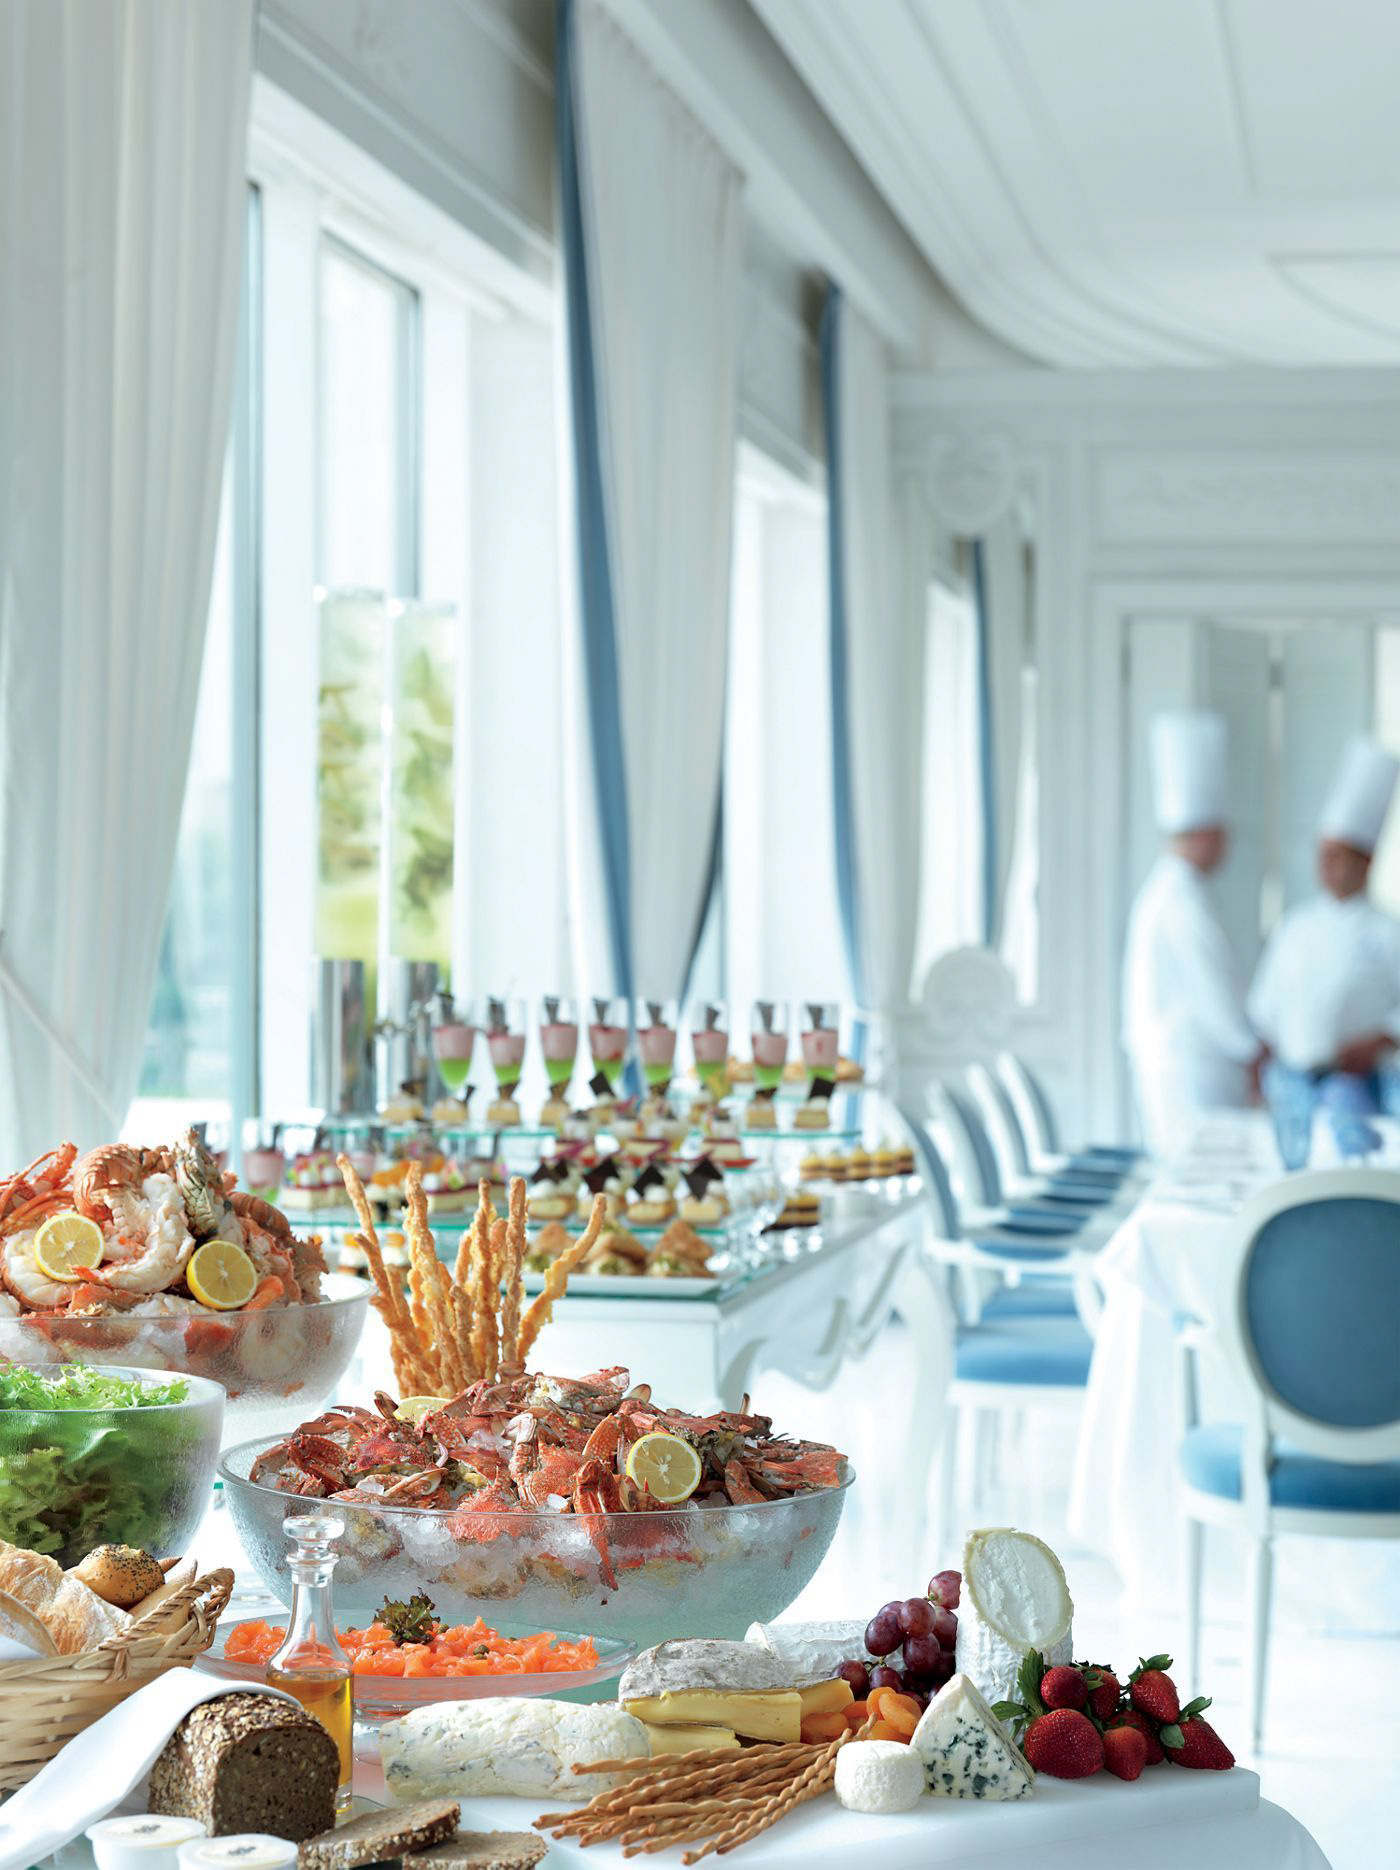 The Ritz-Carlton, Bahrain Resort Hotel – Manama, Bahrain – La Med Restaurant Gourmet Buffet